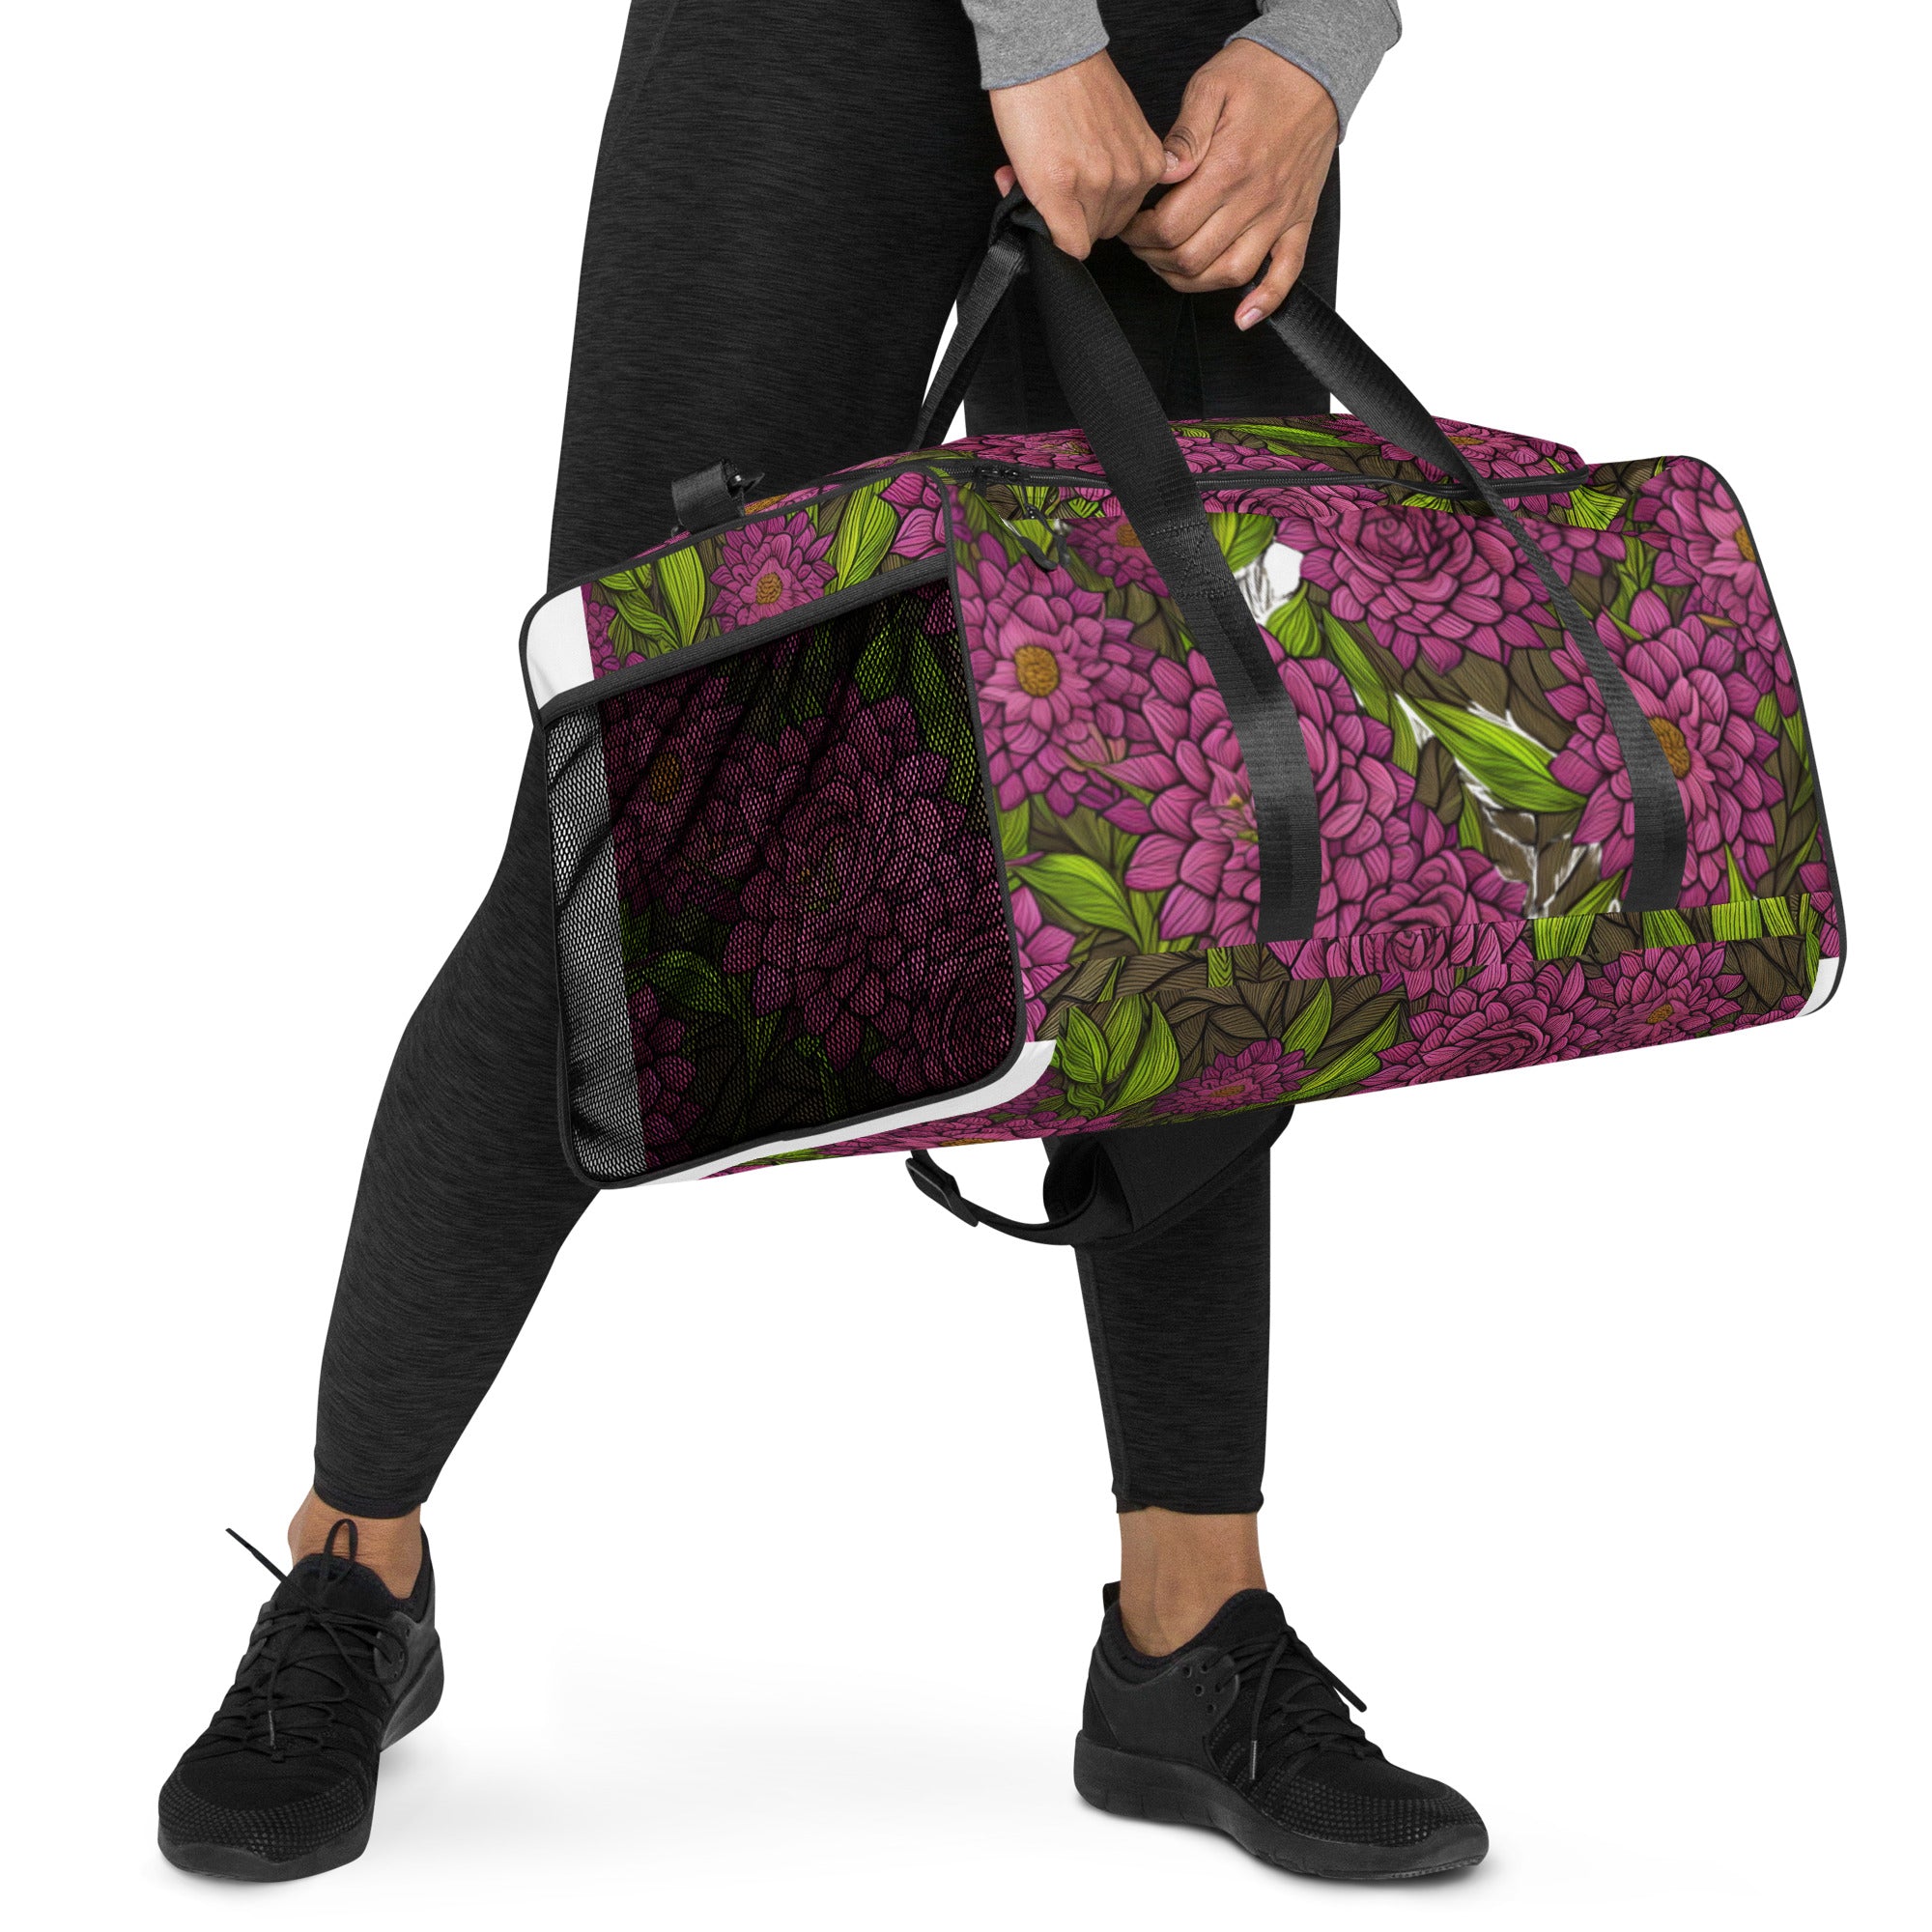 Duffle bag, traveling bag, gym bag, Weekend bag